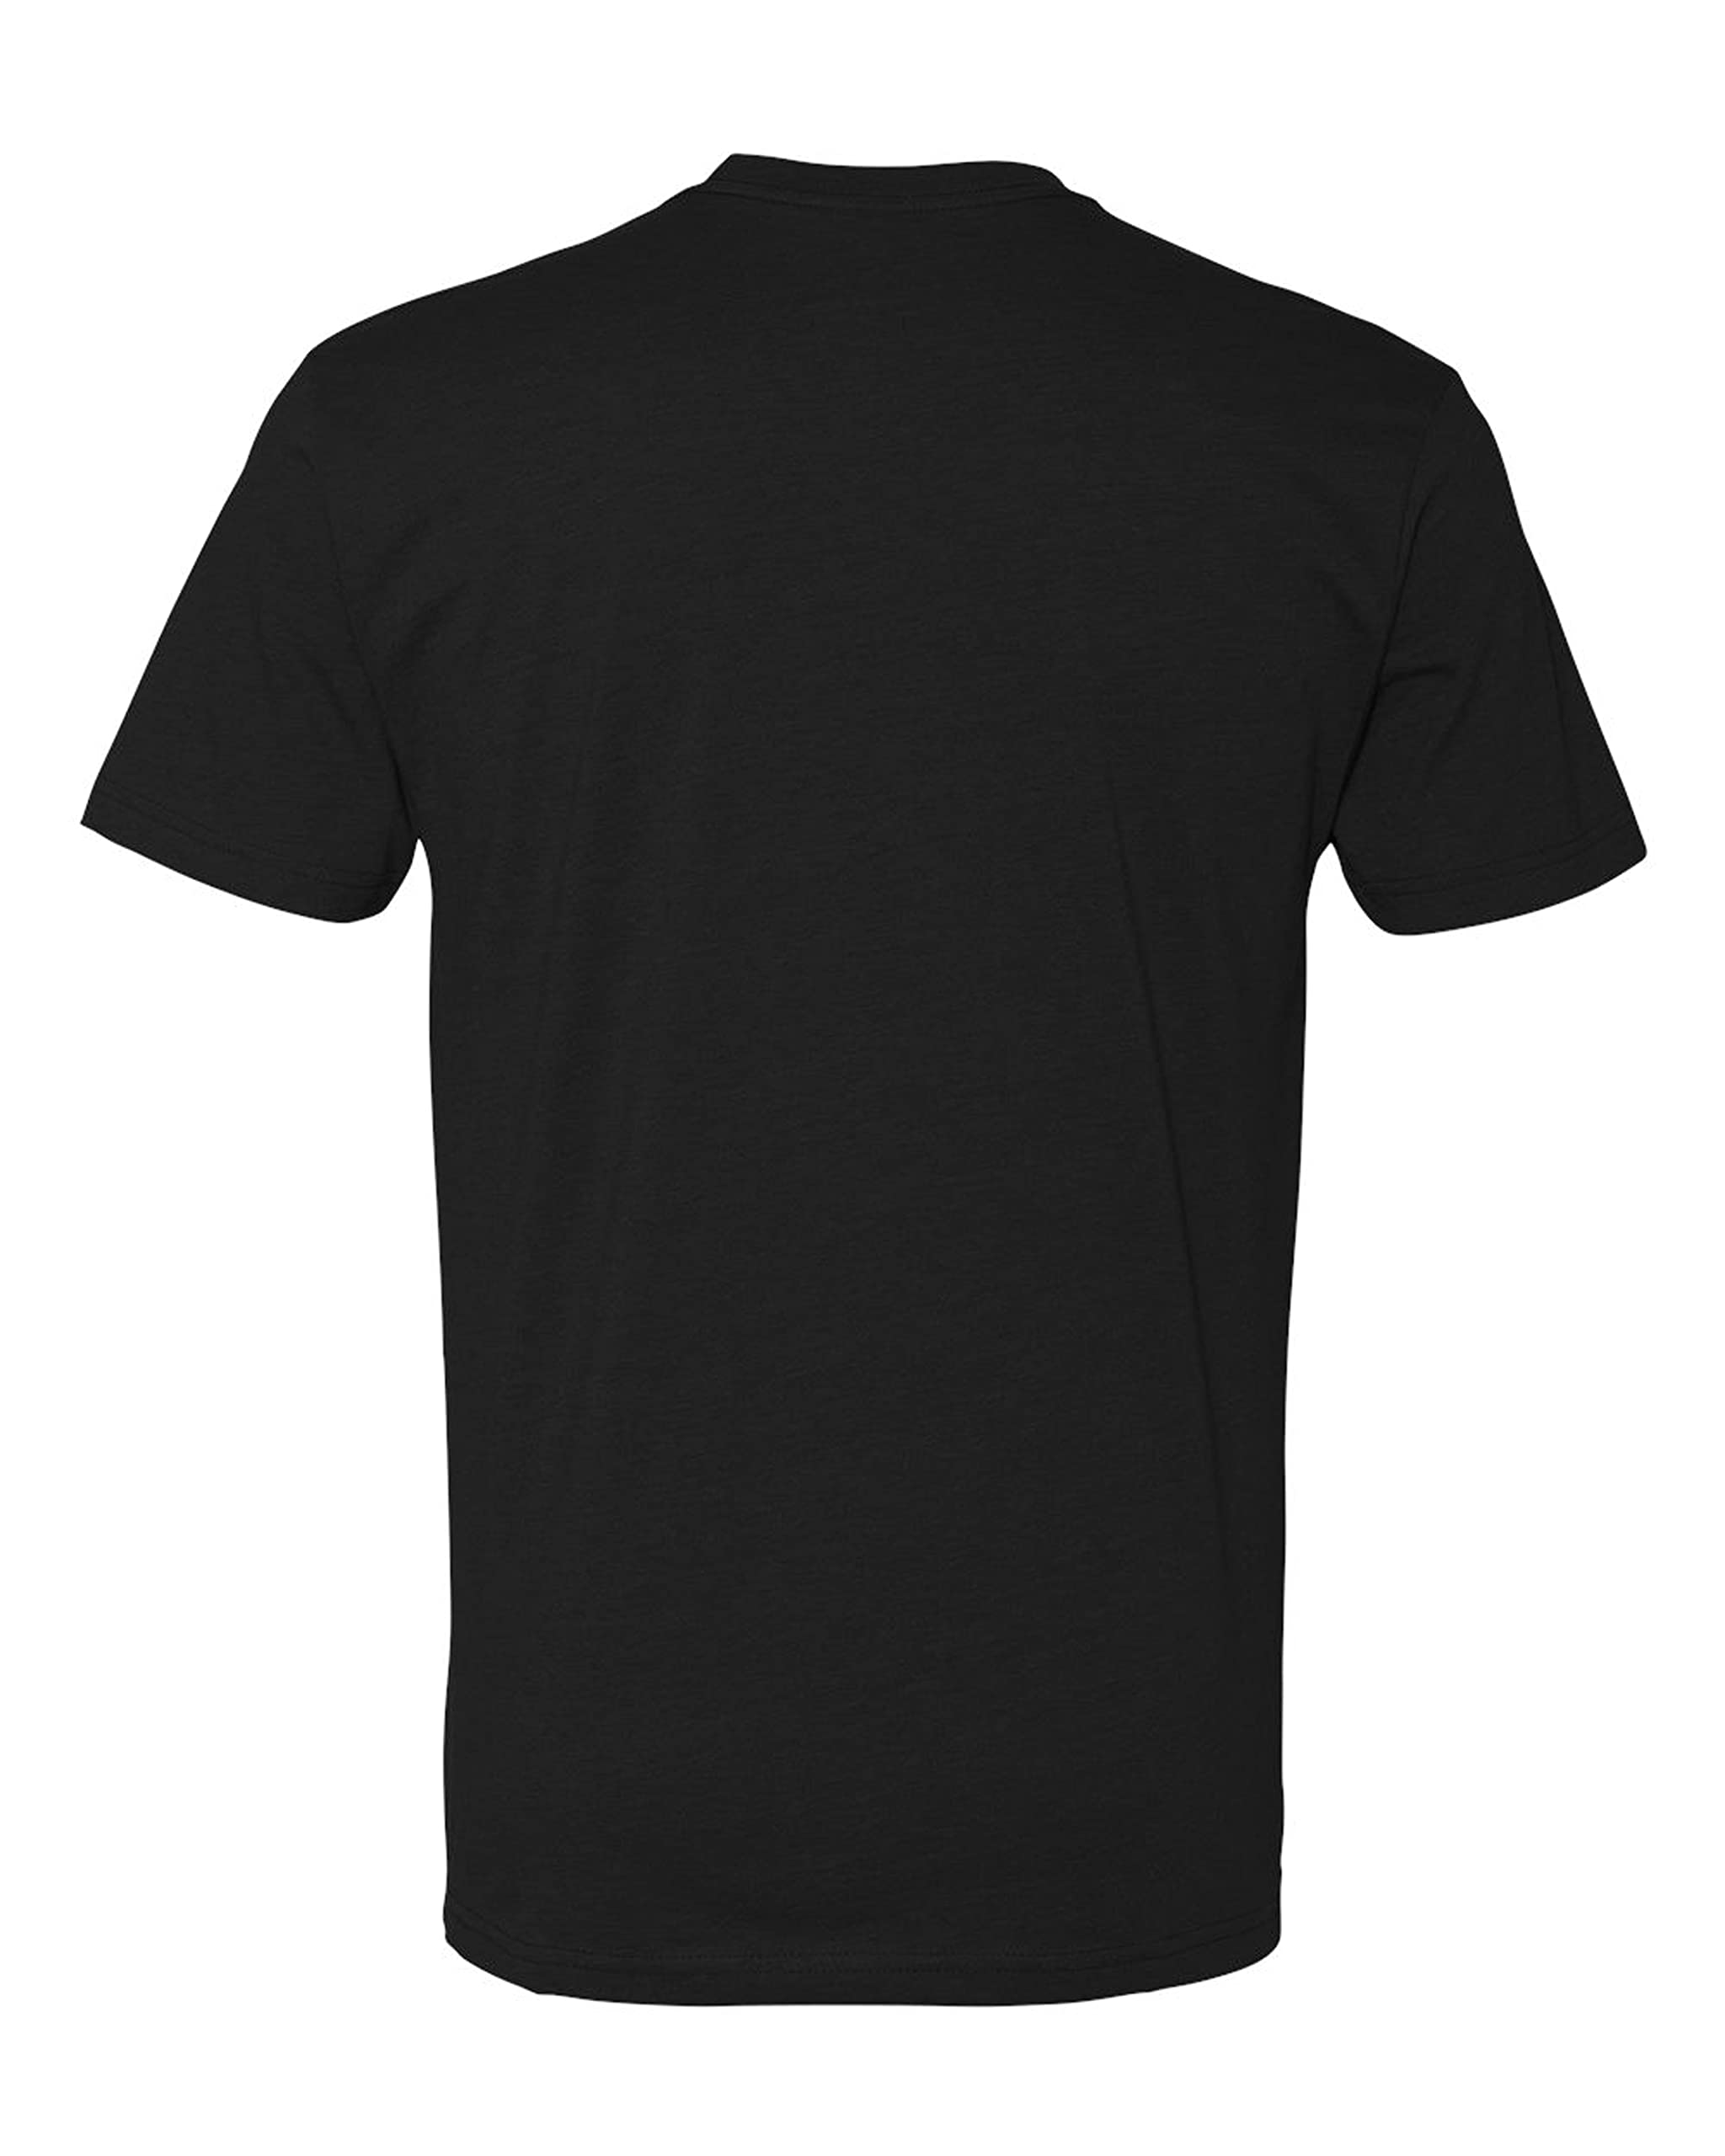 Next Level N6210 T-Shirt - Black - Large